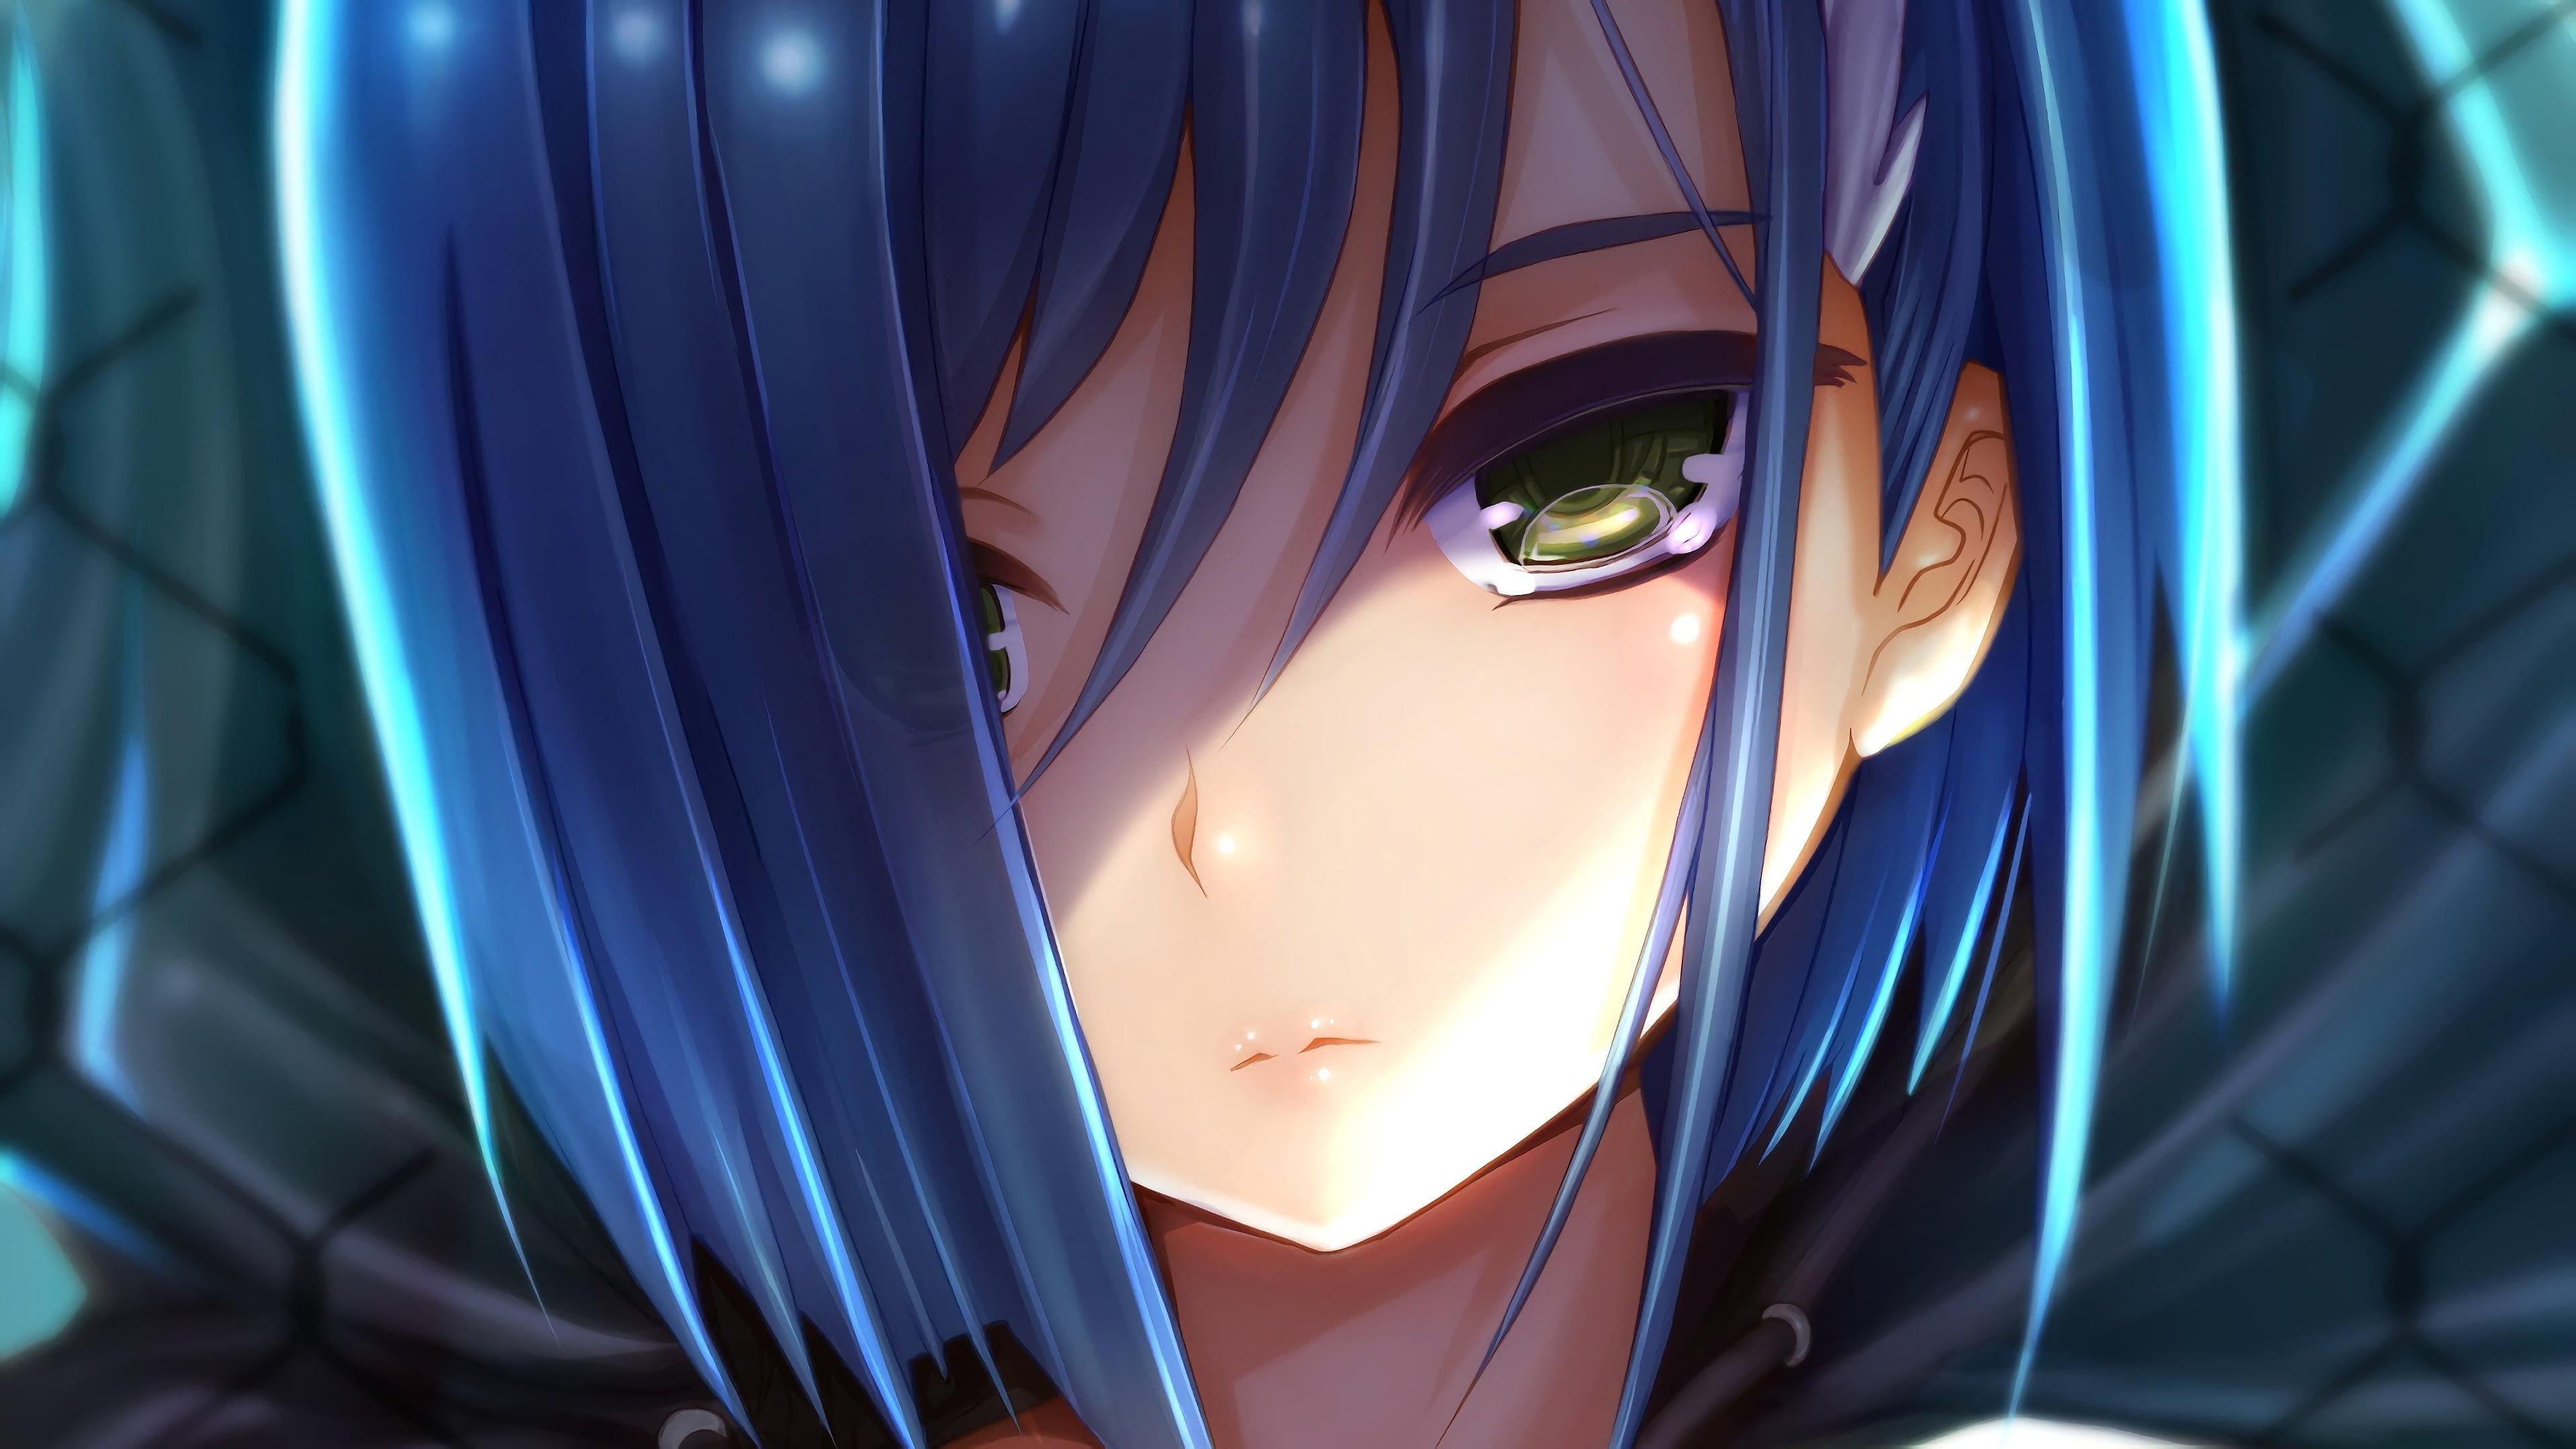 7. "Gloomy anime girl with blue hair" - wide 7